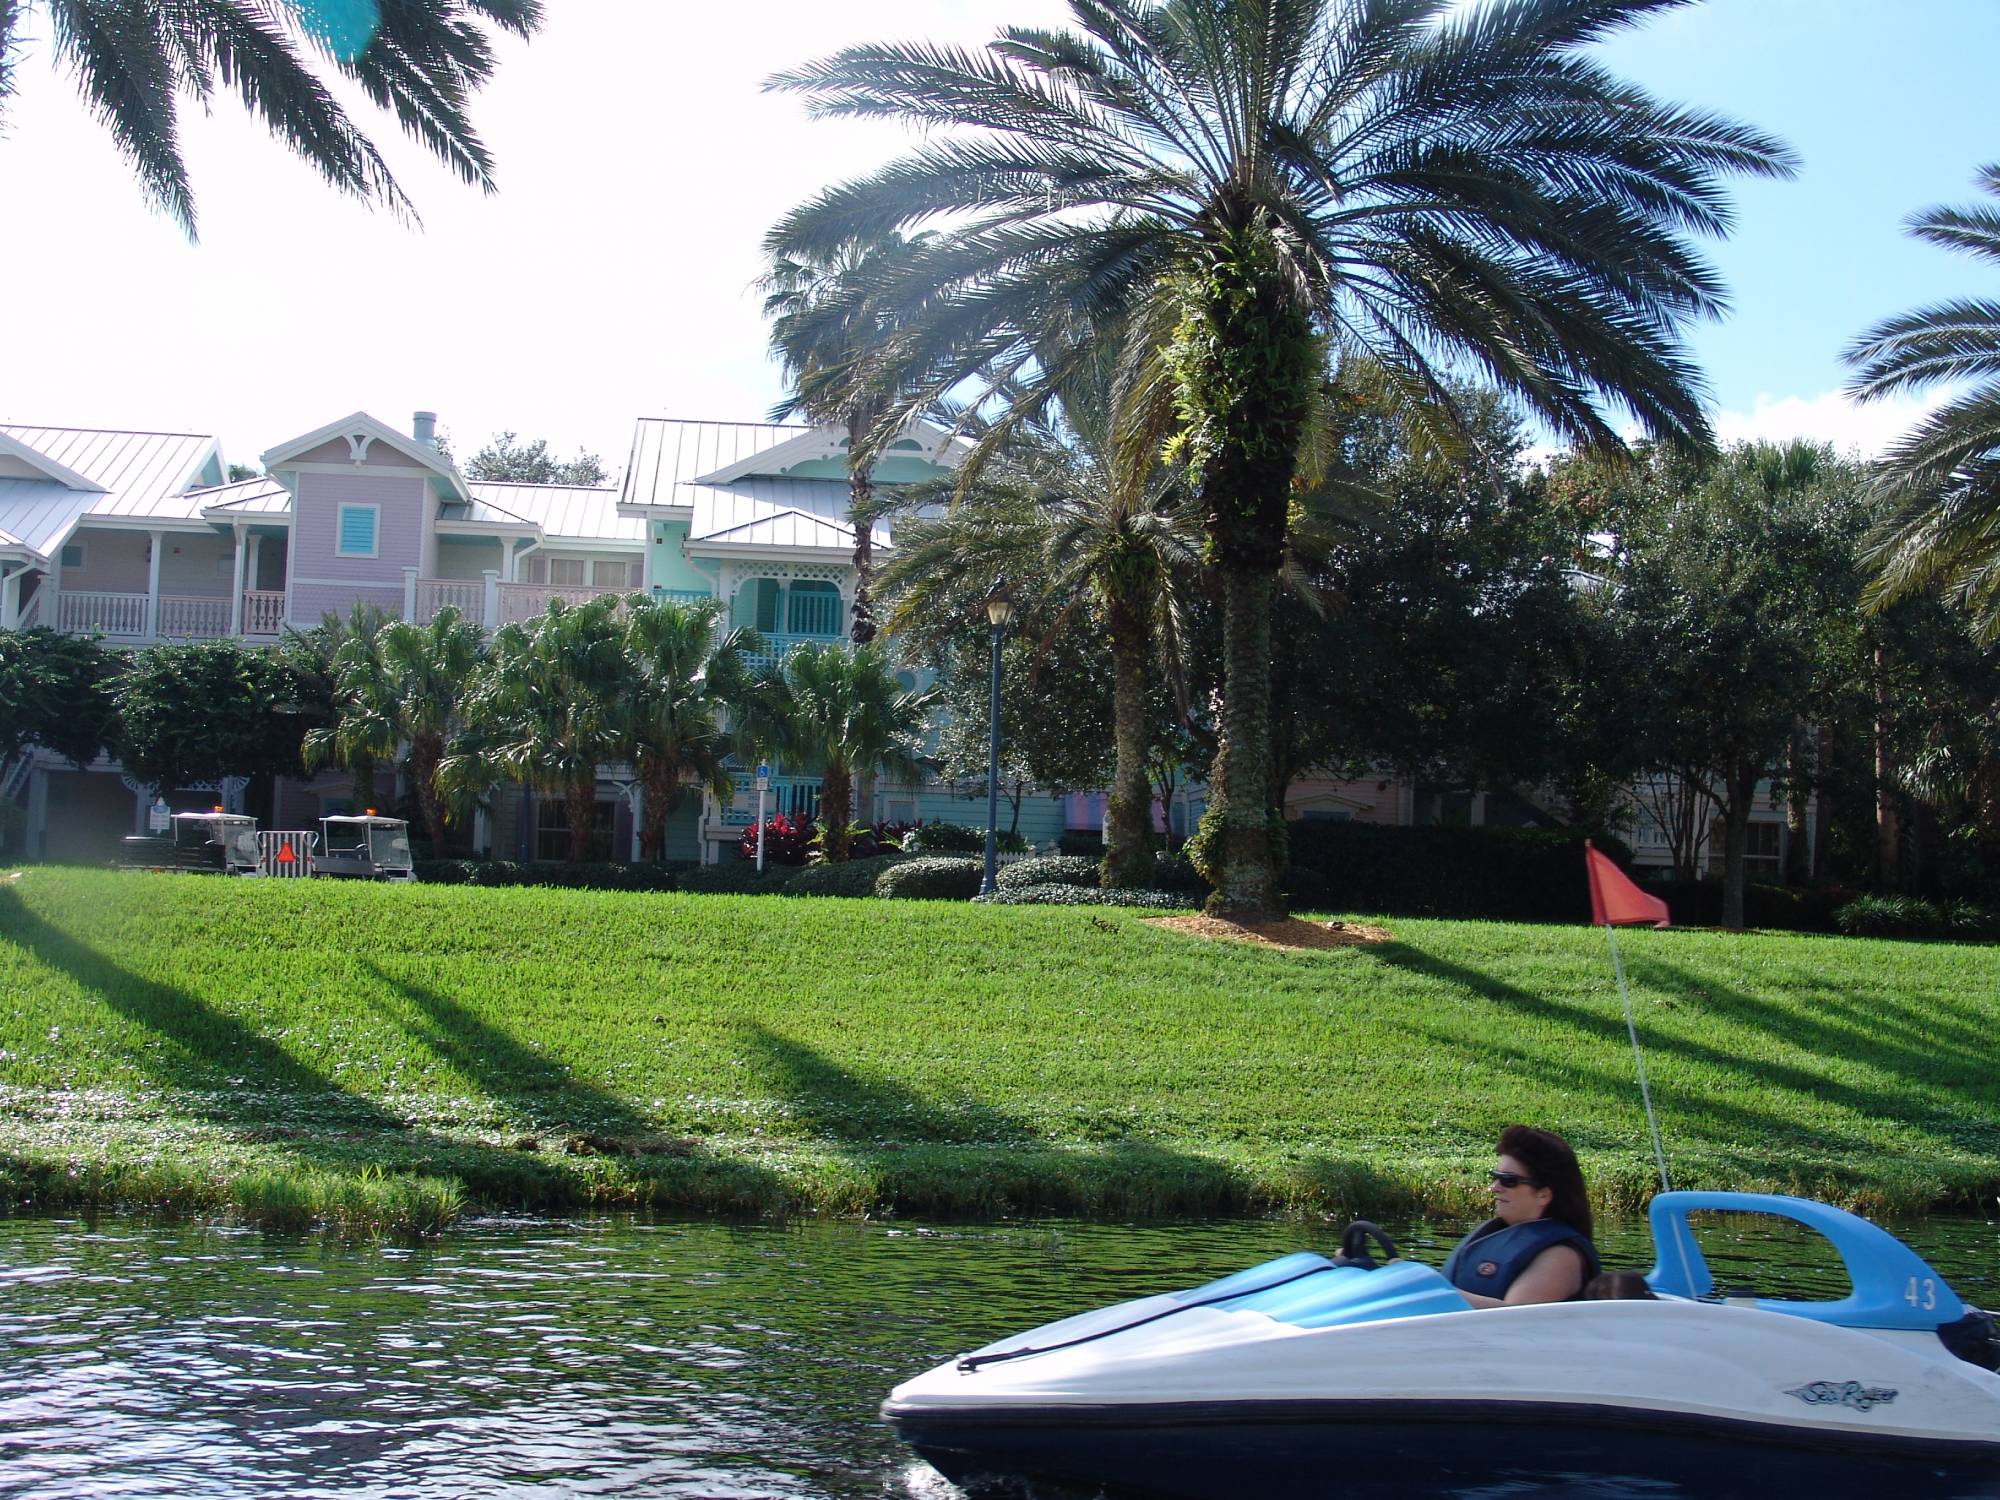 Explore the waterways of Walt Disney World by Boat! | PassPorter.com